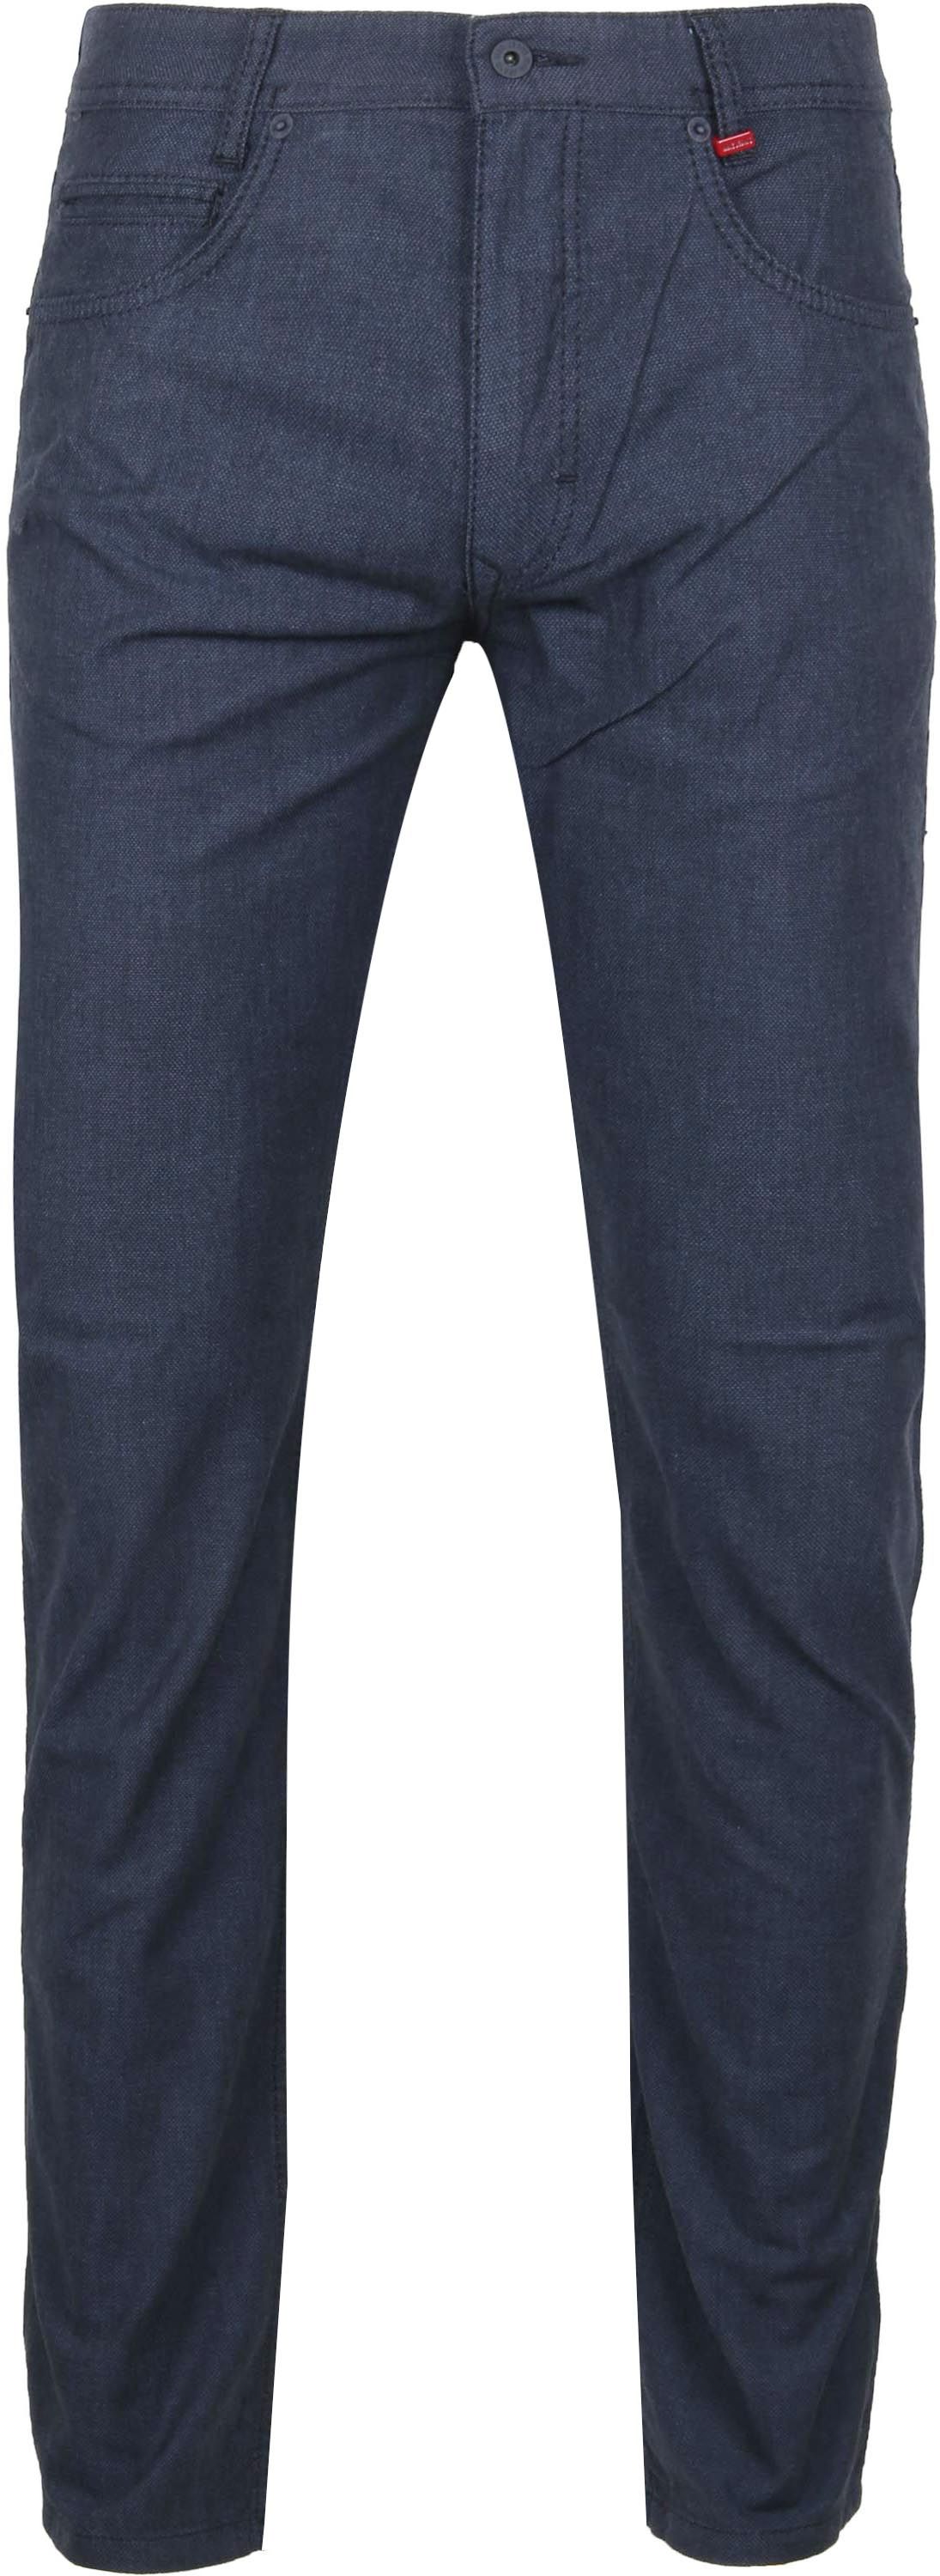 Mac Trousers Arne Dark Blue Dark Blue size W 36